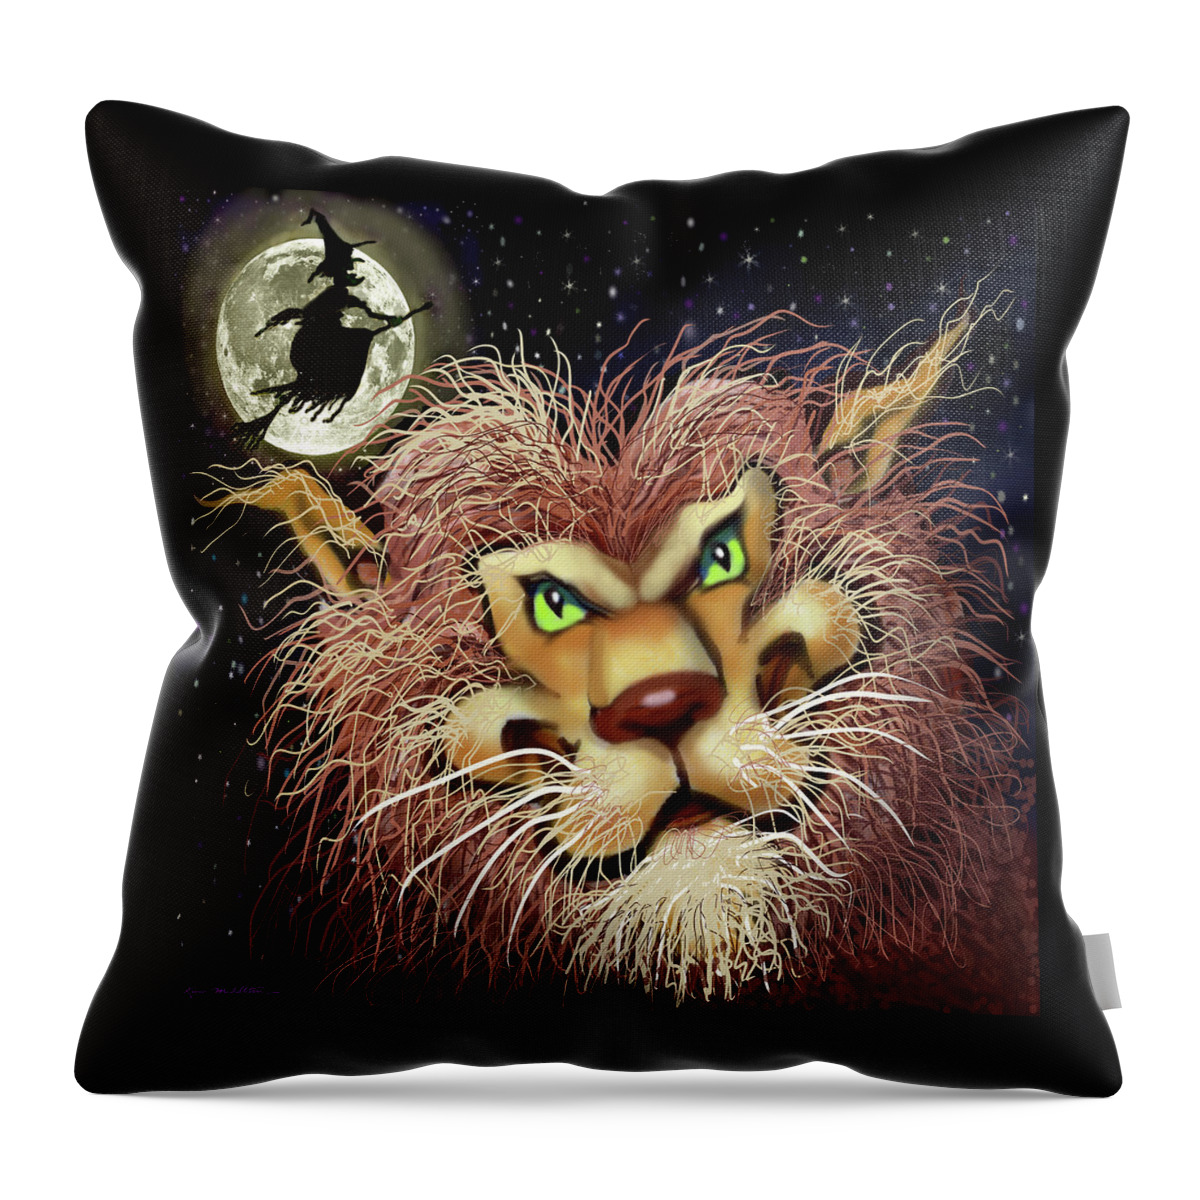 Werewolf Throw Pillow featuring the digital art Werewolf by Kevin Middleton